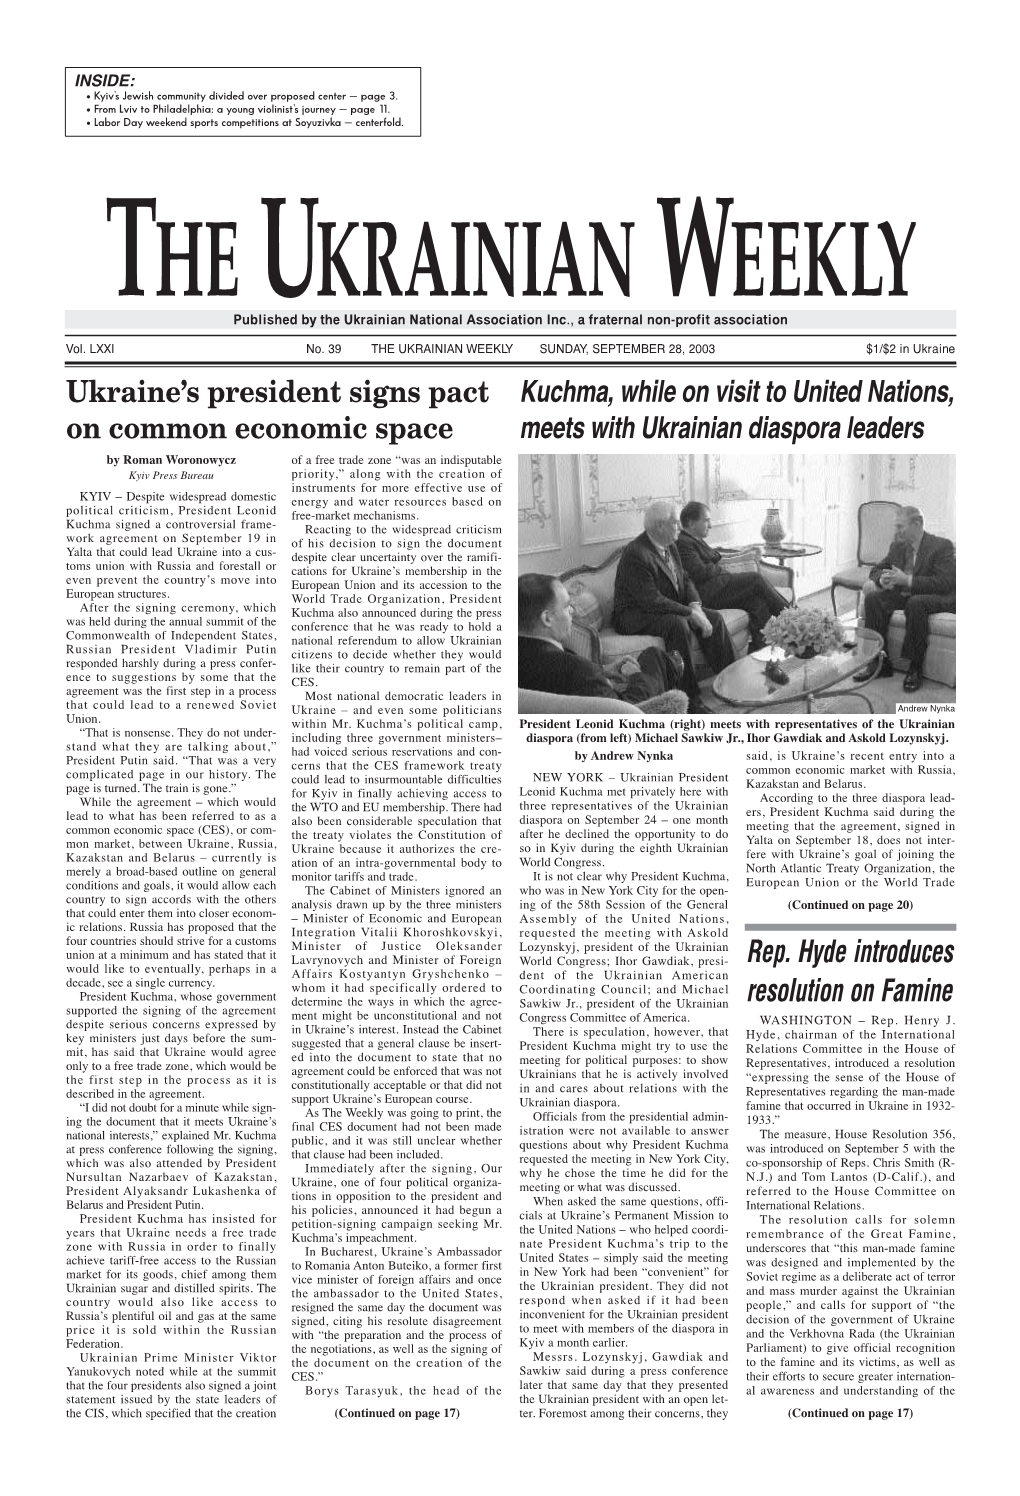 The Ukrainian Weekly 2003, No.39